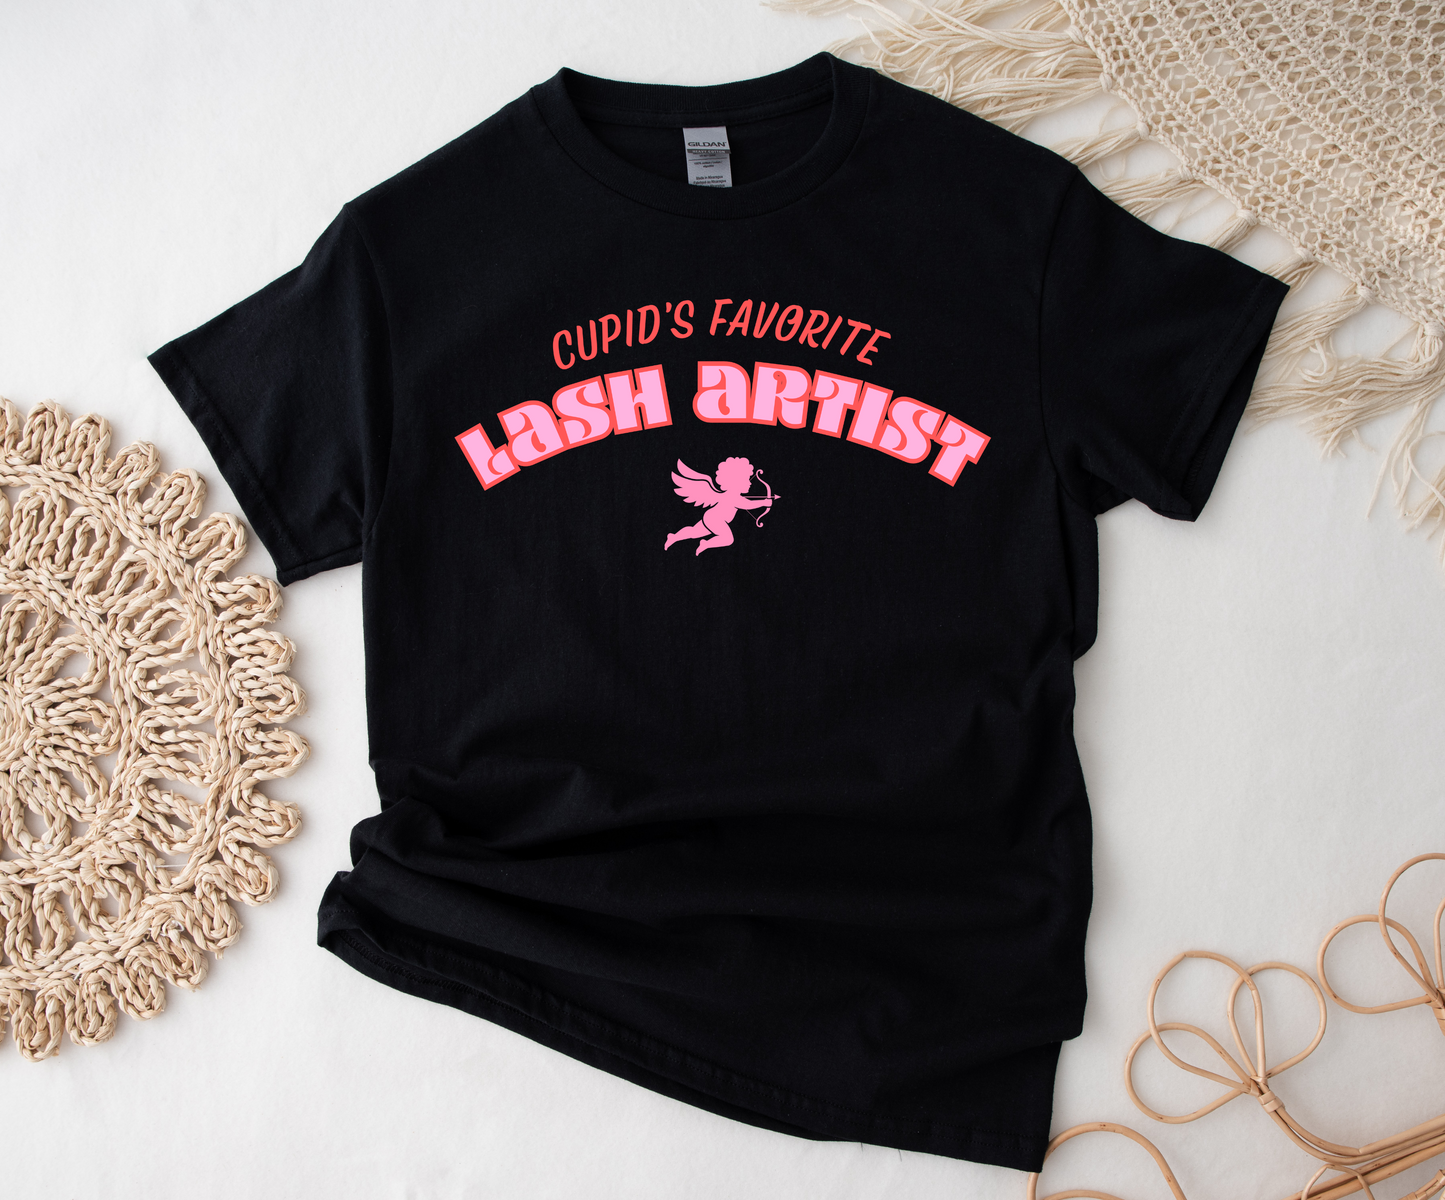 sweatshirt or t-shirt - cupid's favorite lash artist